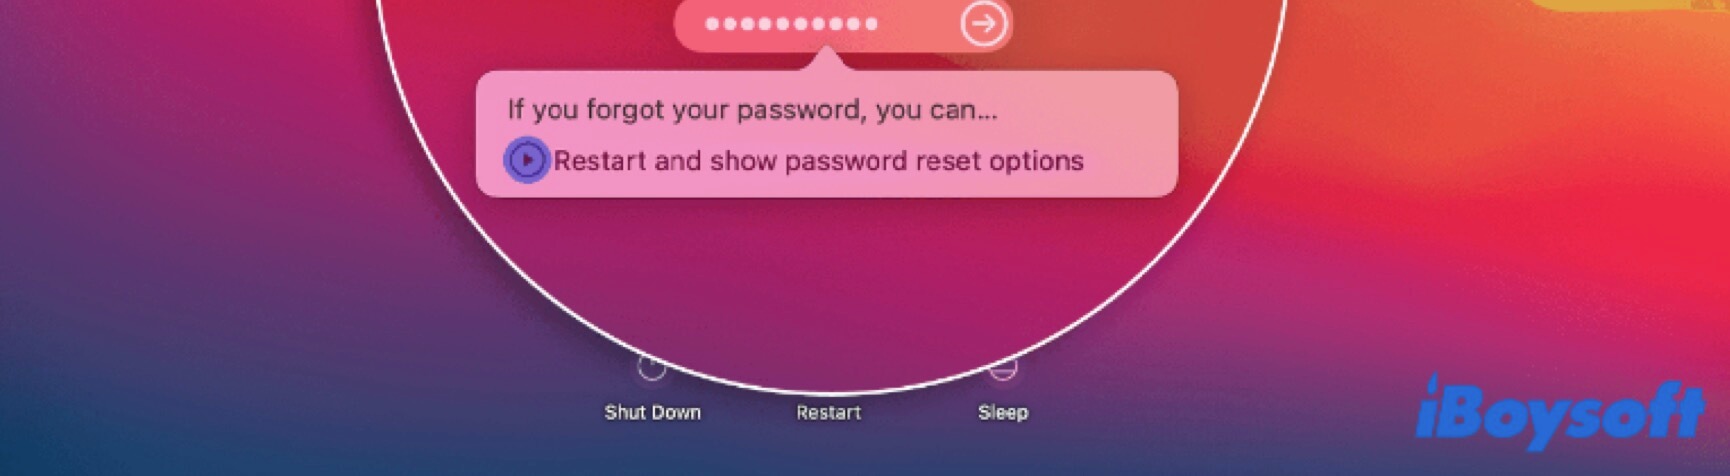 restart and show password reset options on Mac